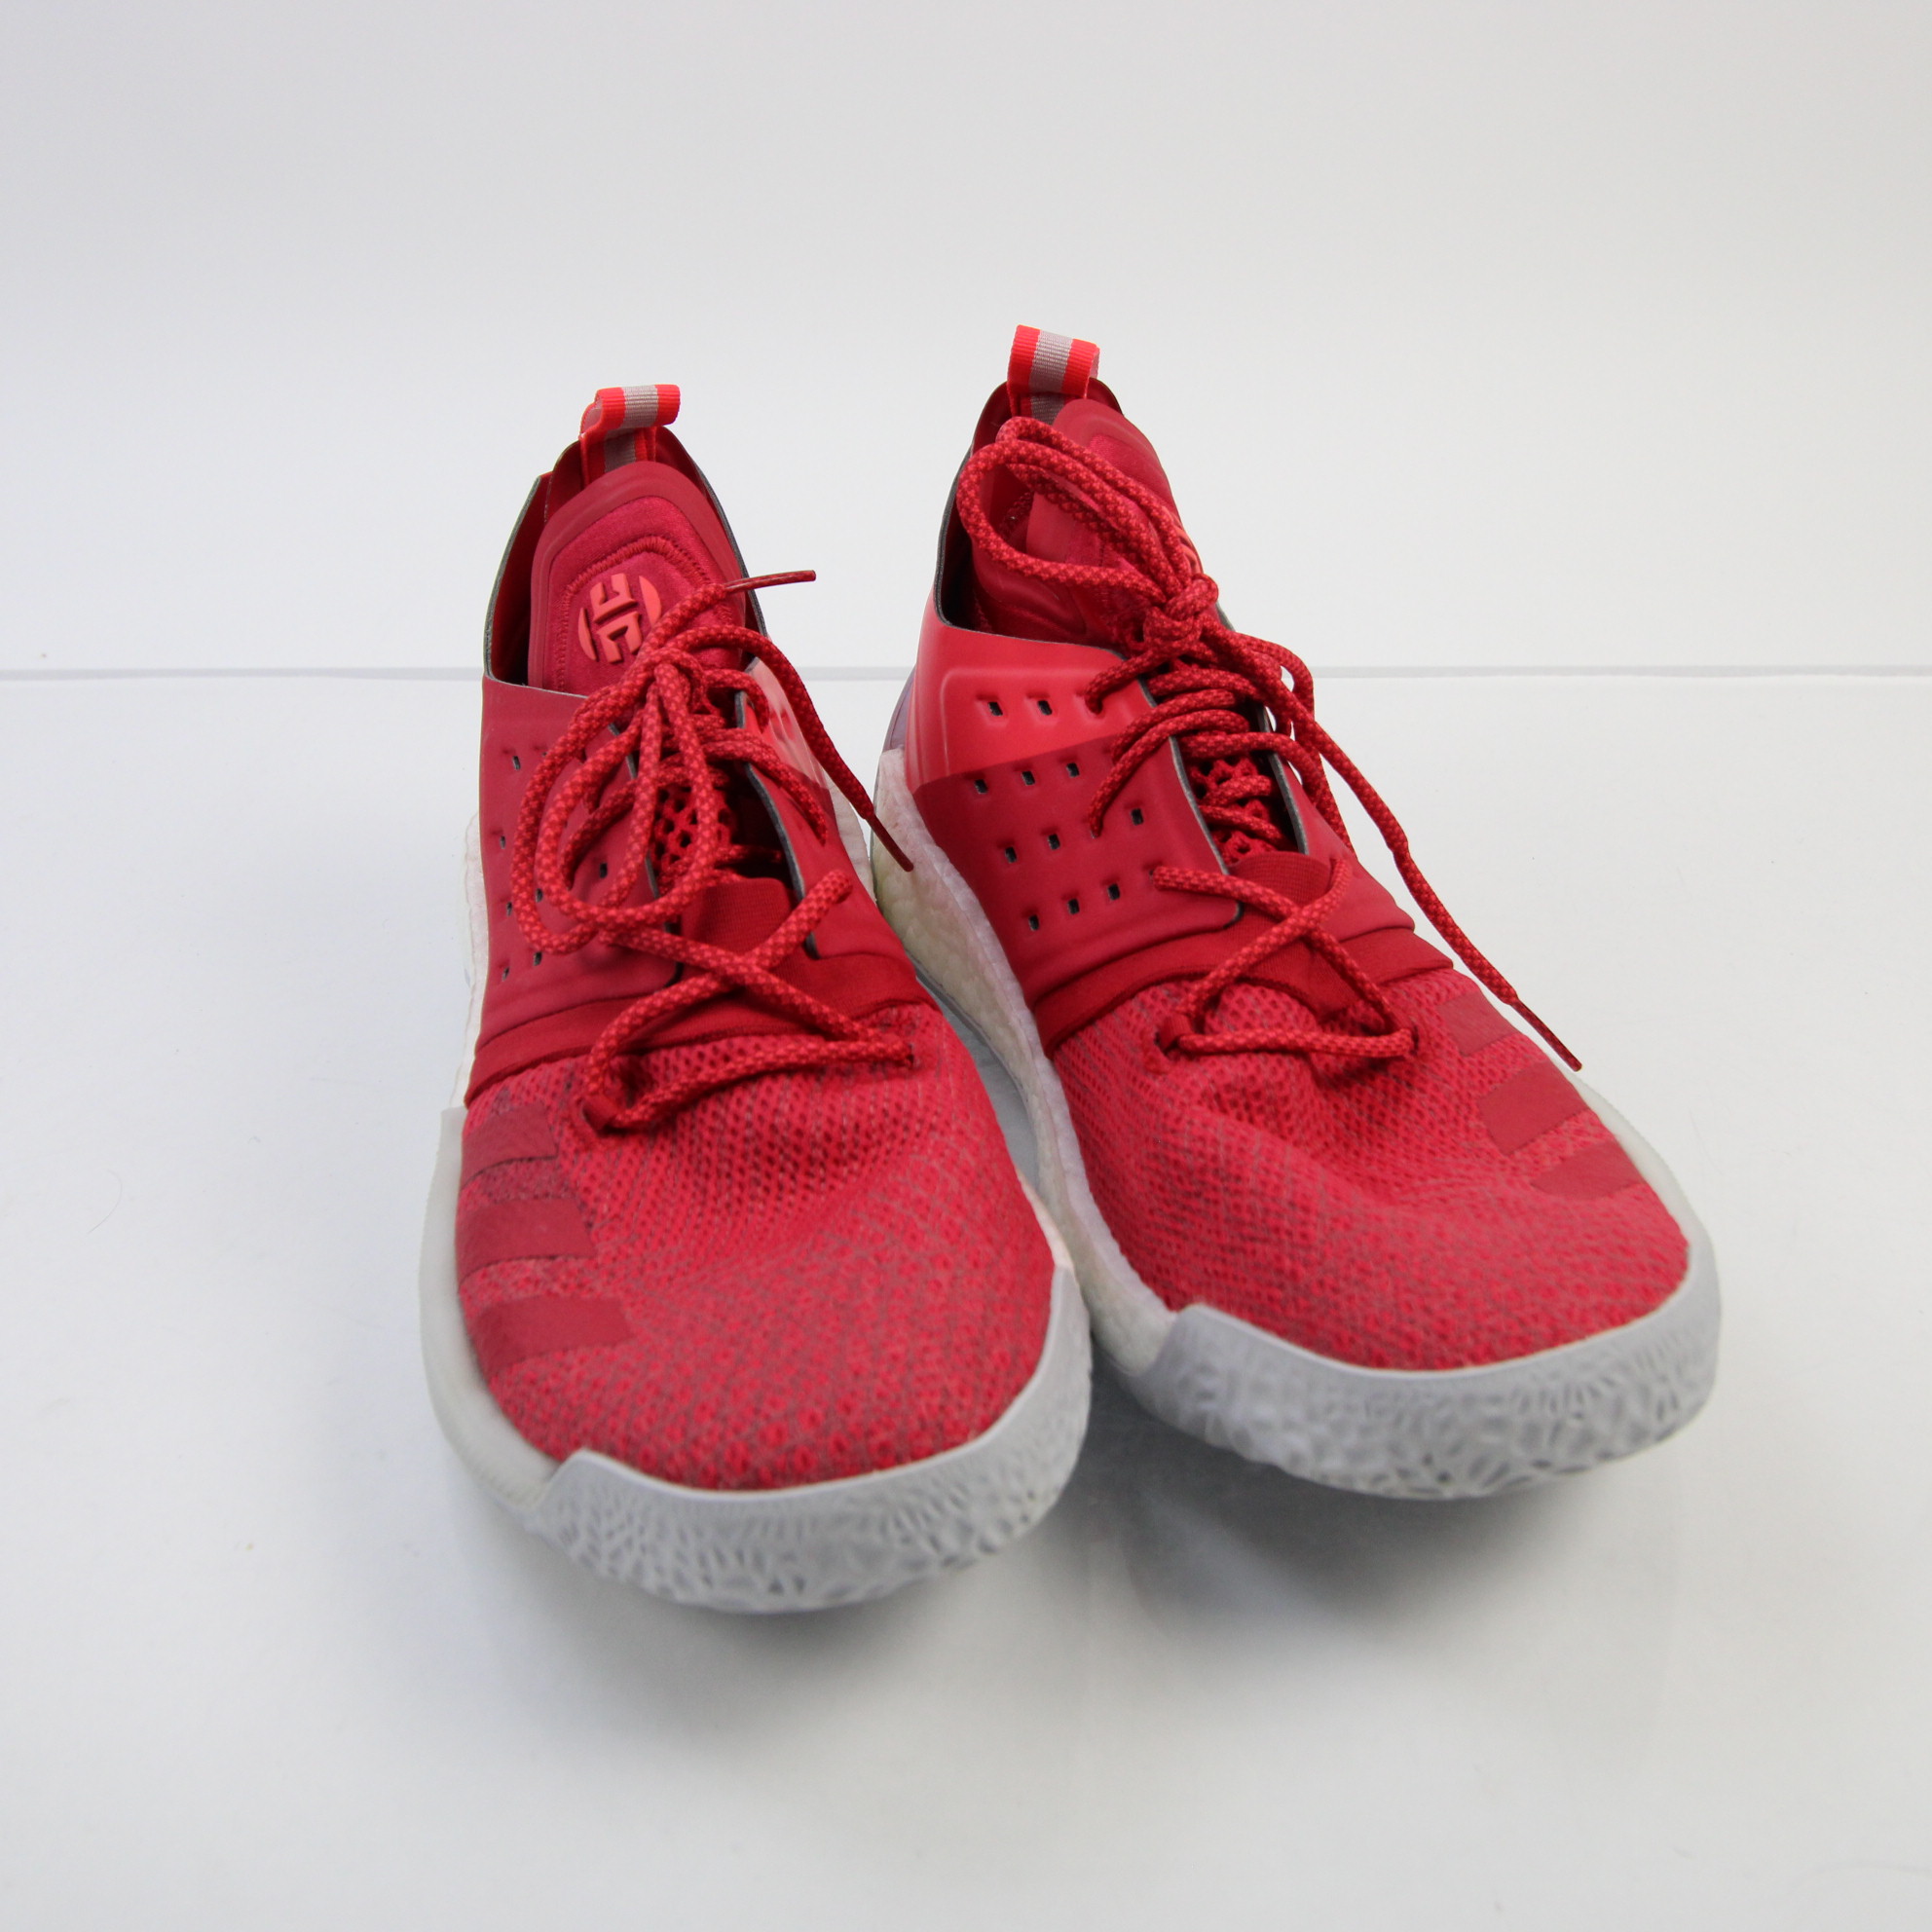 adidas Basketball Shoe Men's Red/White Used | eBay